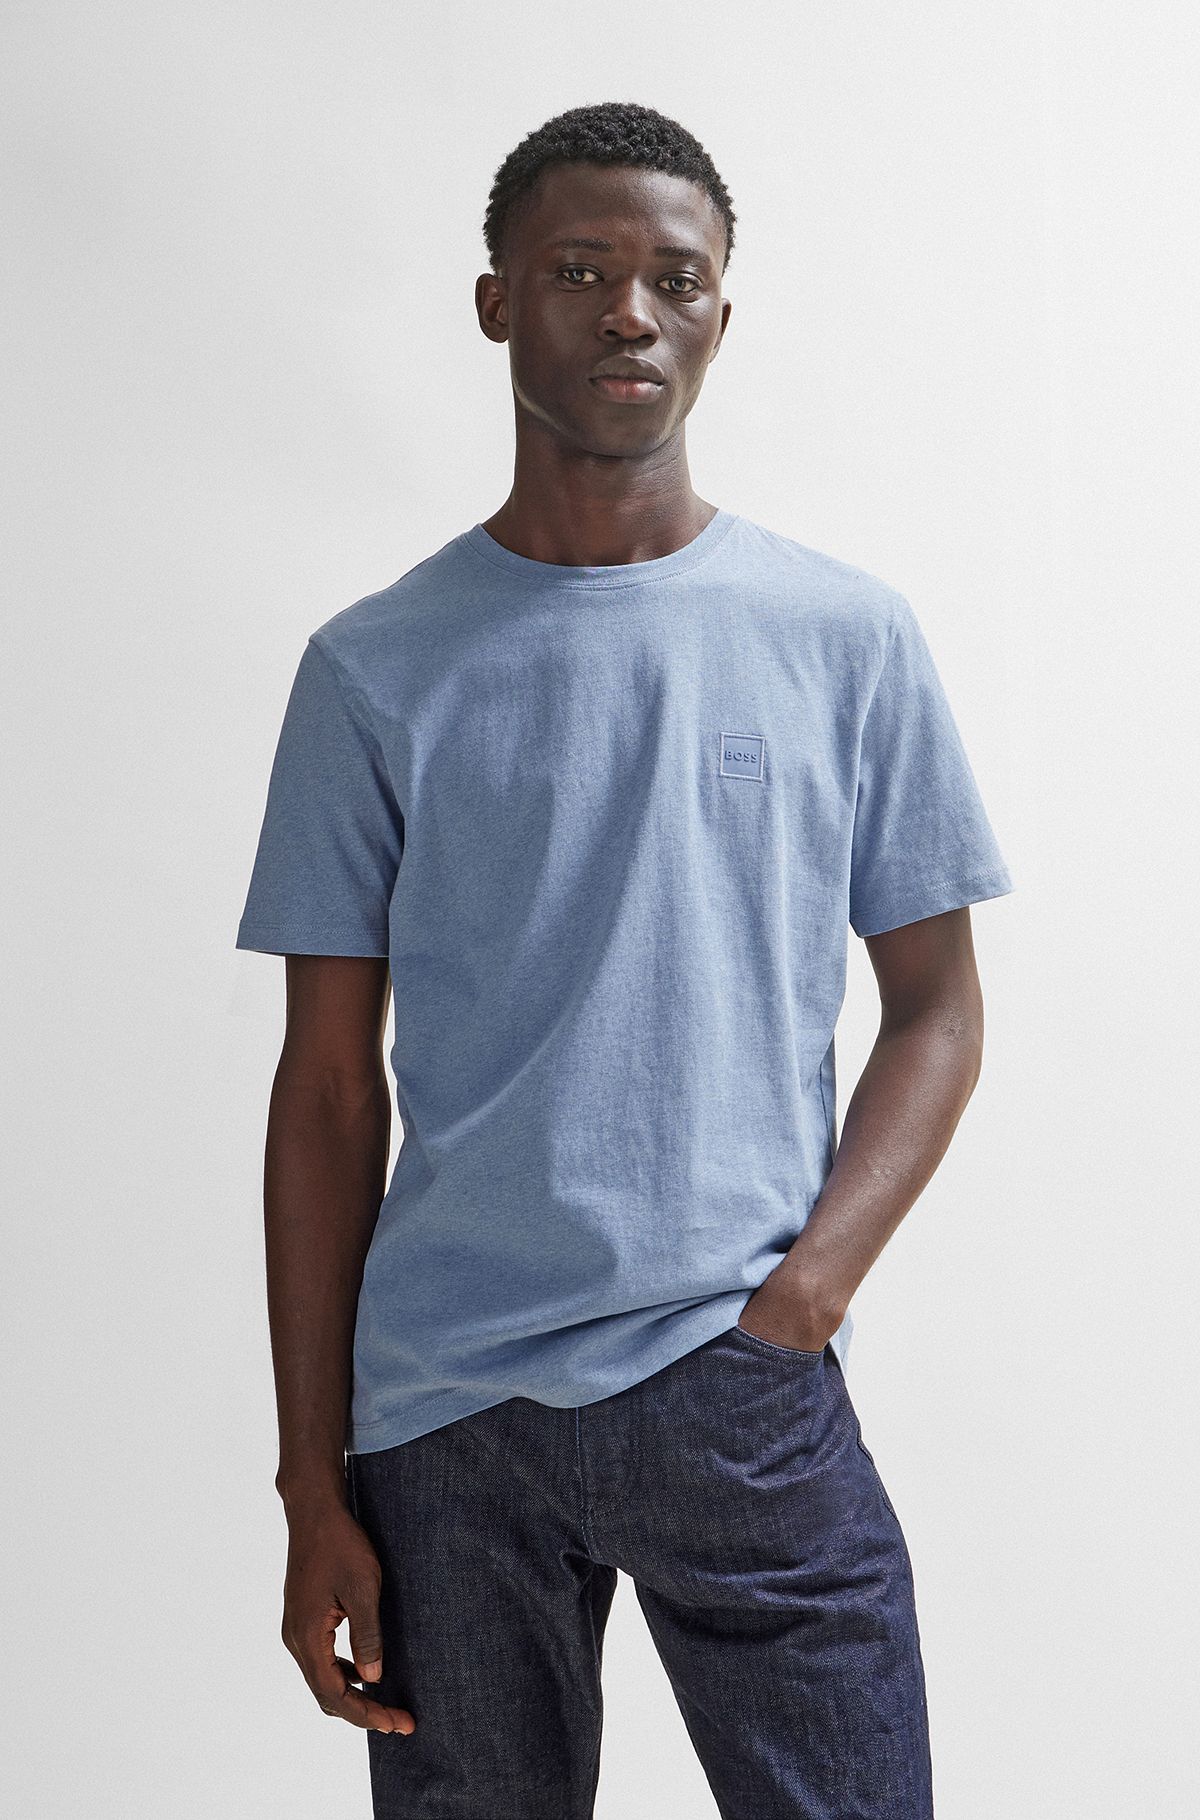 Cotton-jersey T-shirt with logo patch, Light Blue